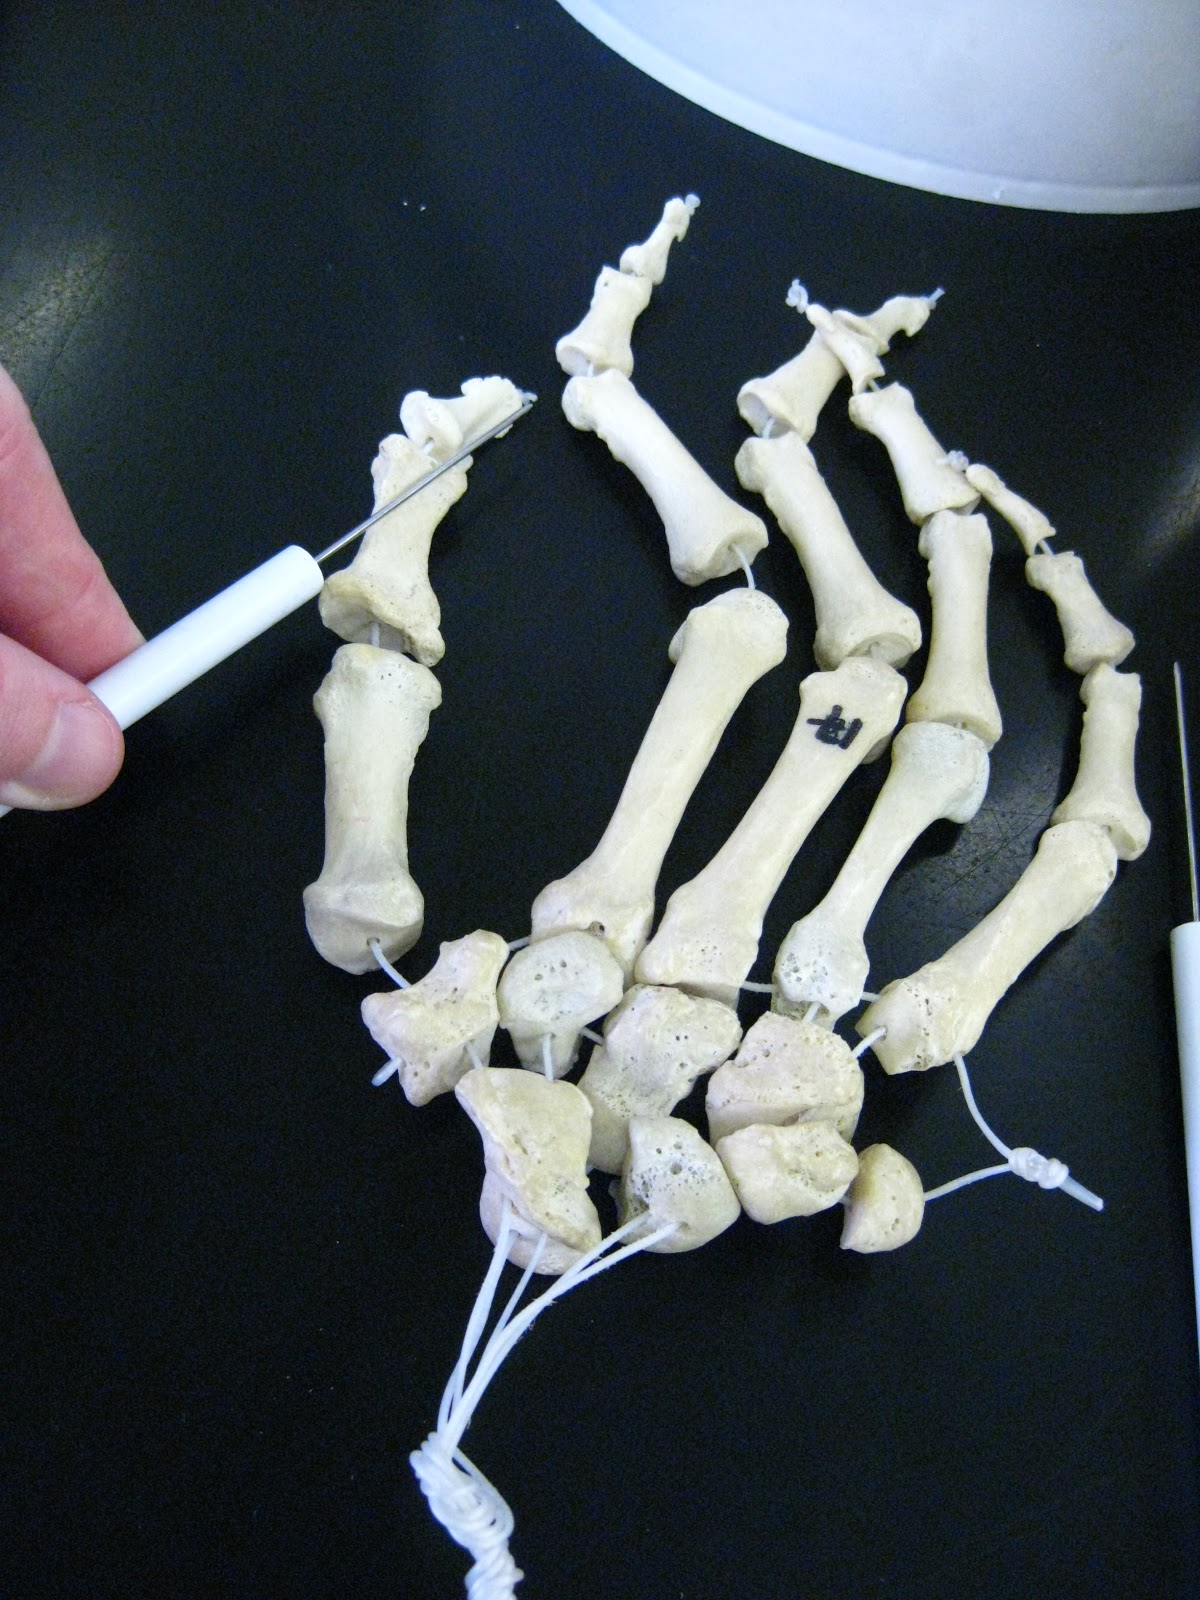 Boned: Human Skeleton - hand